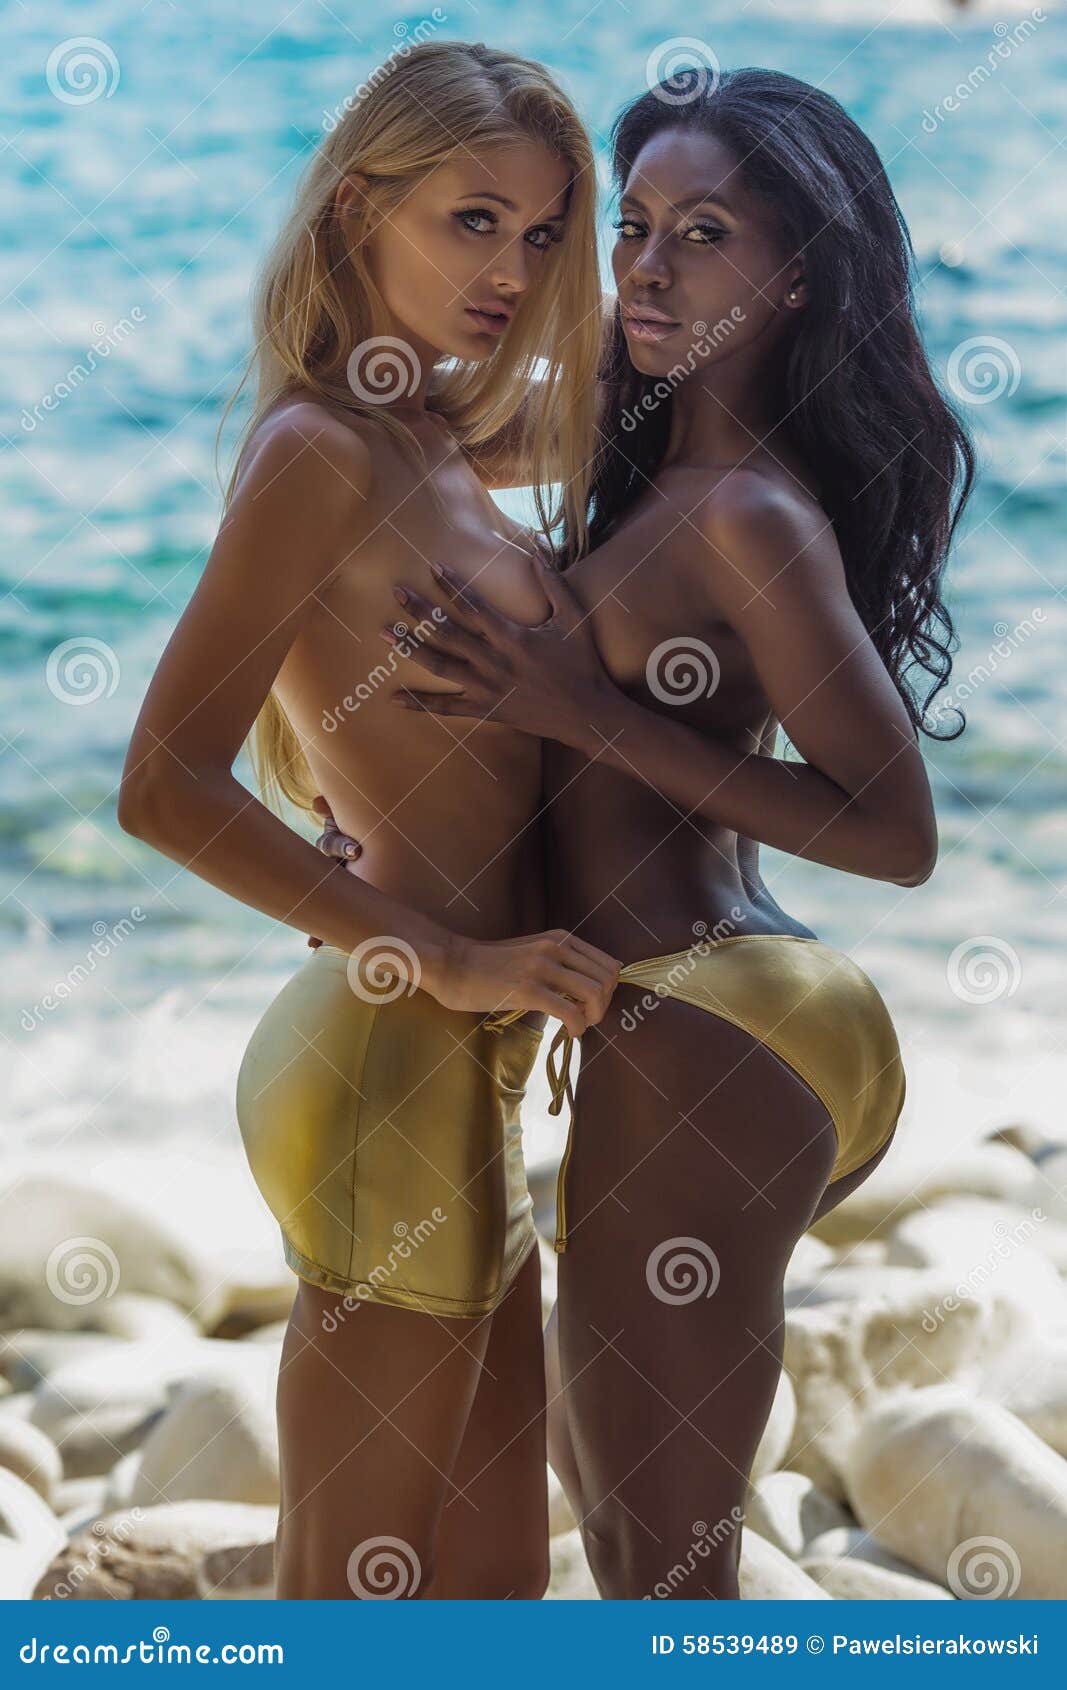 Nude women on beach pics